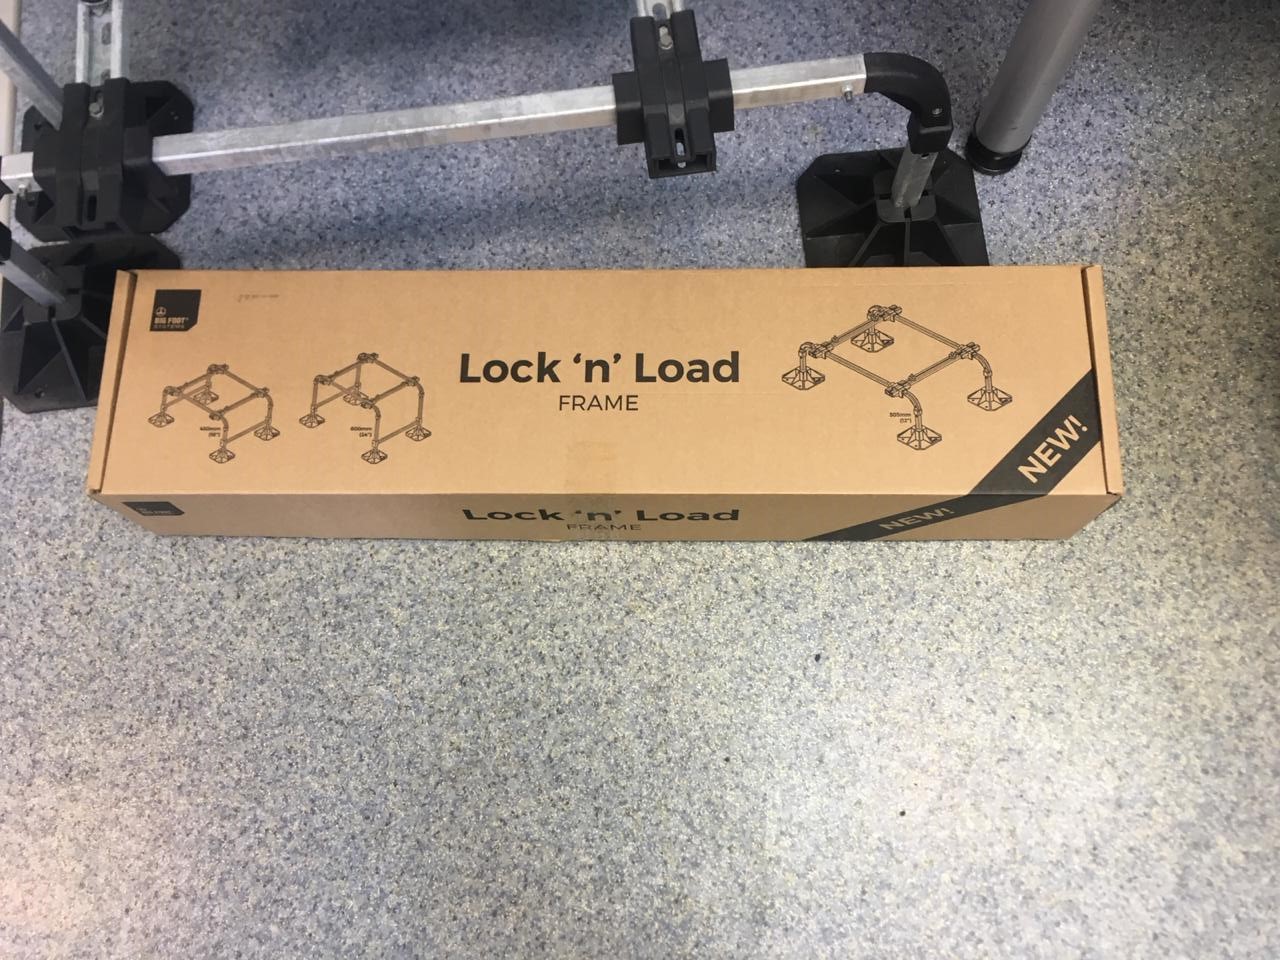 Lock ‘n’ Load